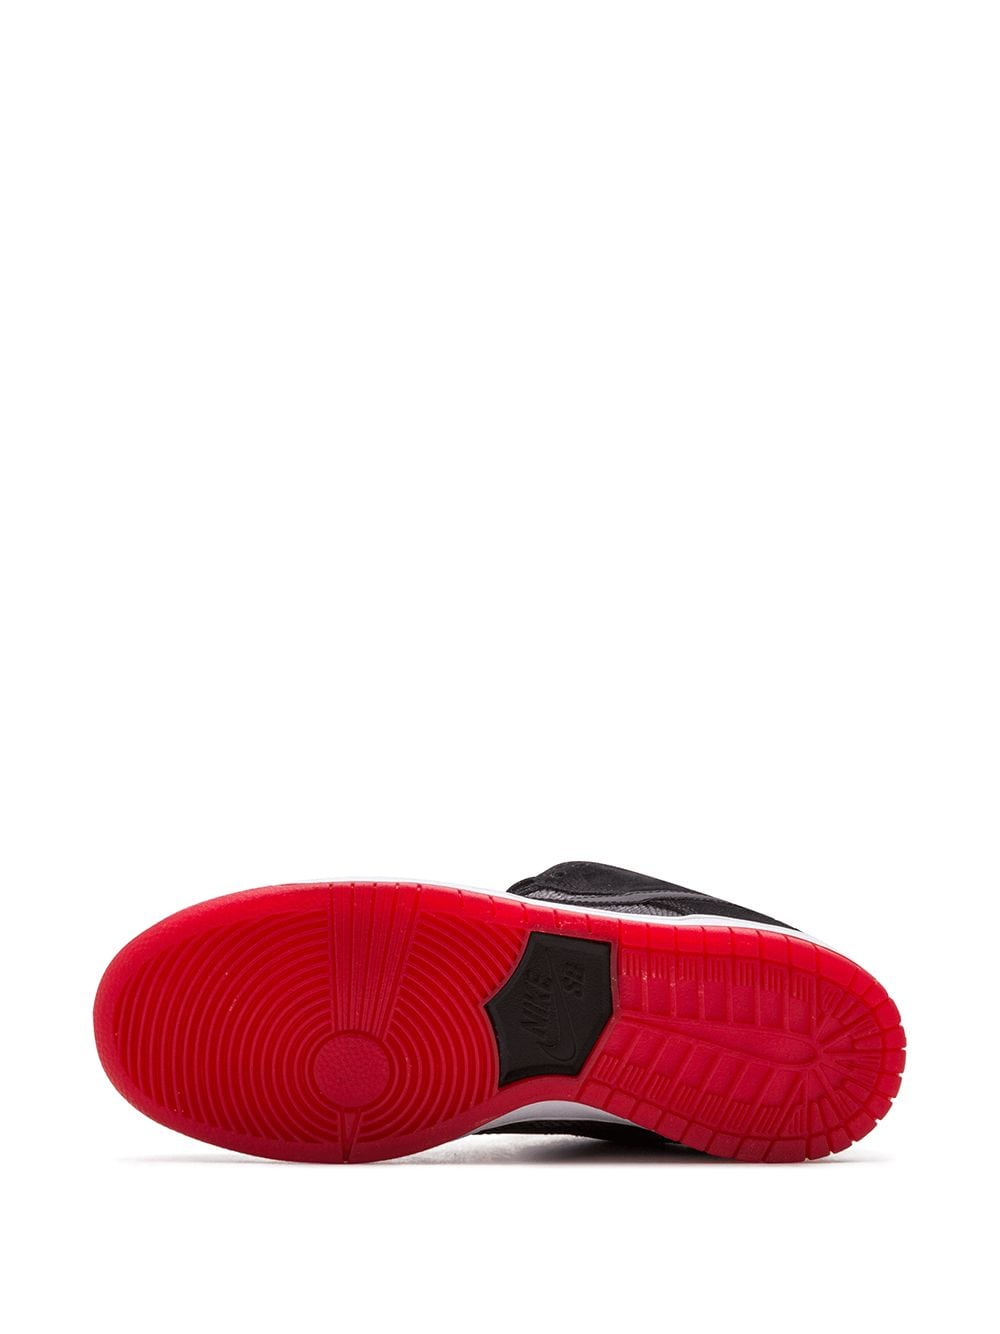 Nike Dunk Low Premium SB "Snakeskin" sneakers